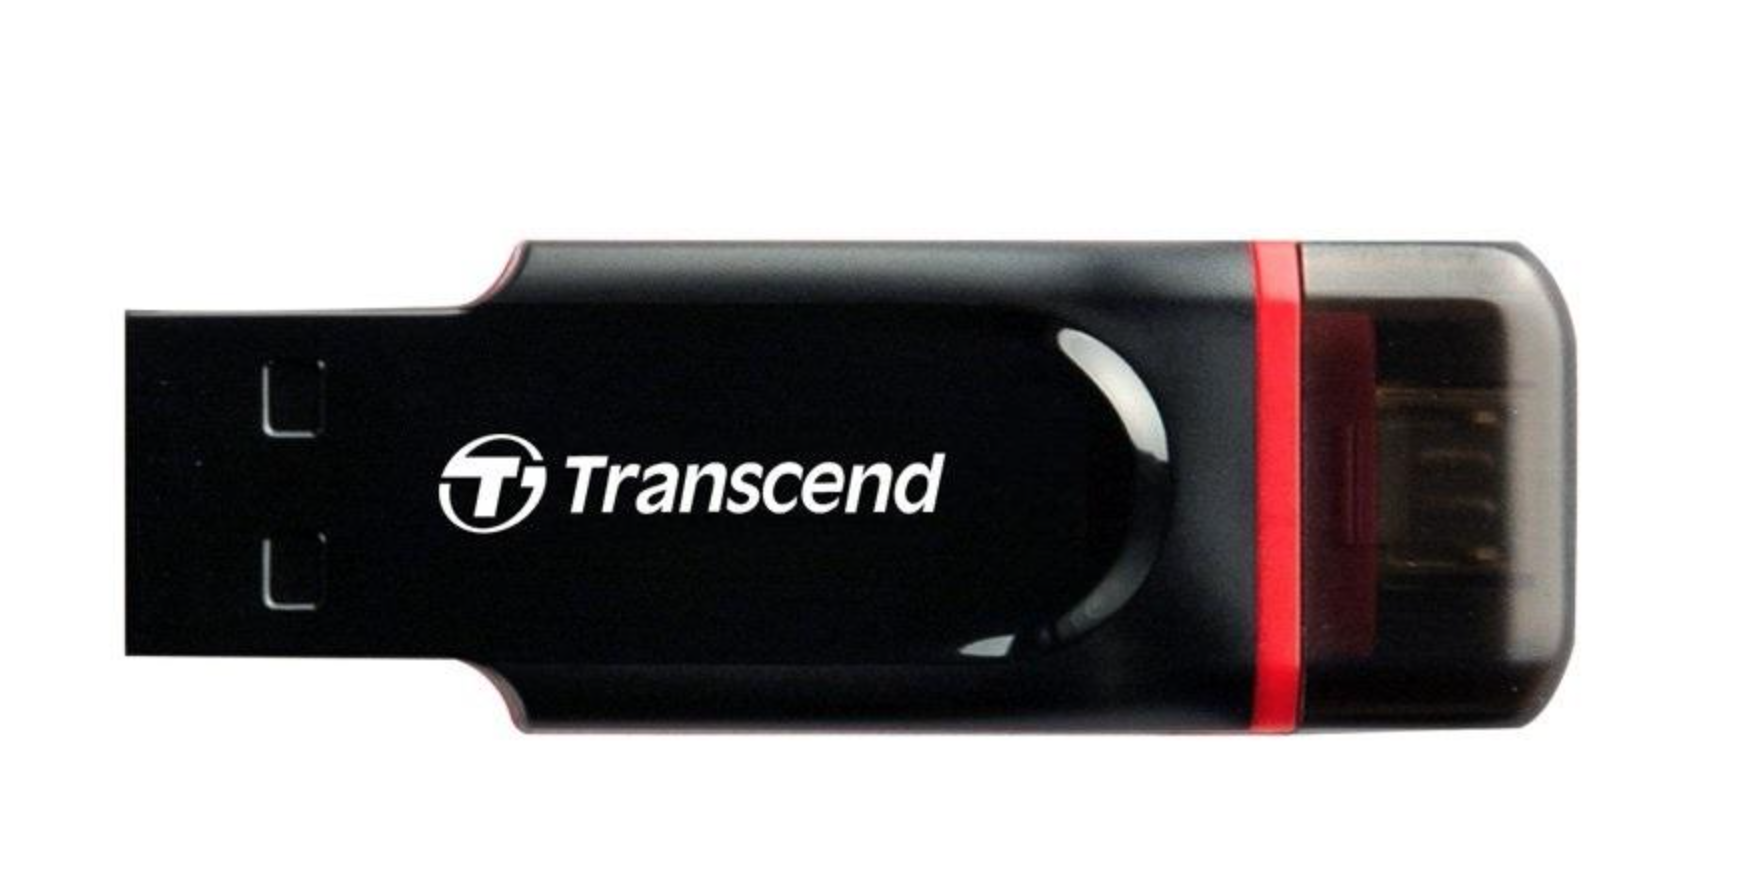 JETFLASH Transcend 8gb. Флешка Transcend 8 GB. Флешка трансценд 32 ГБ. Transcend USB 2.0 2gb. Восстановление флешки transcend